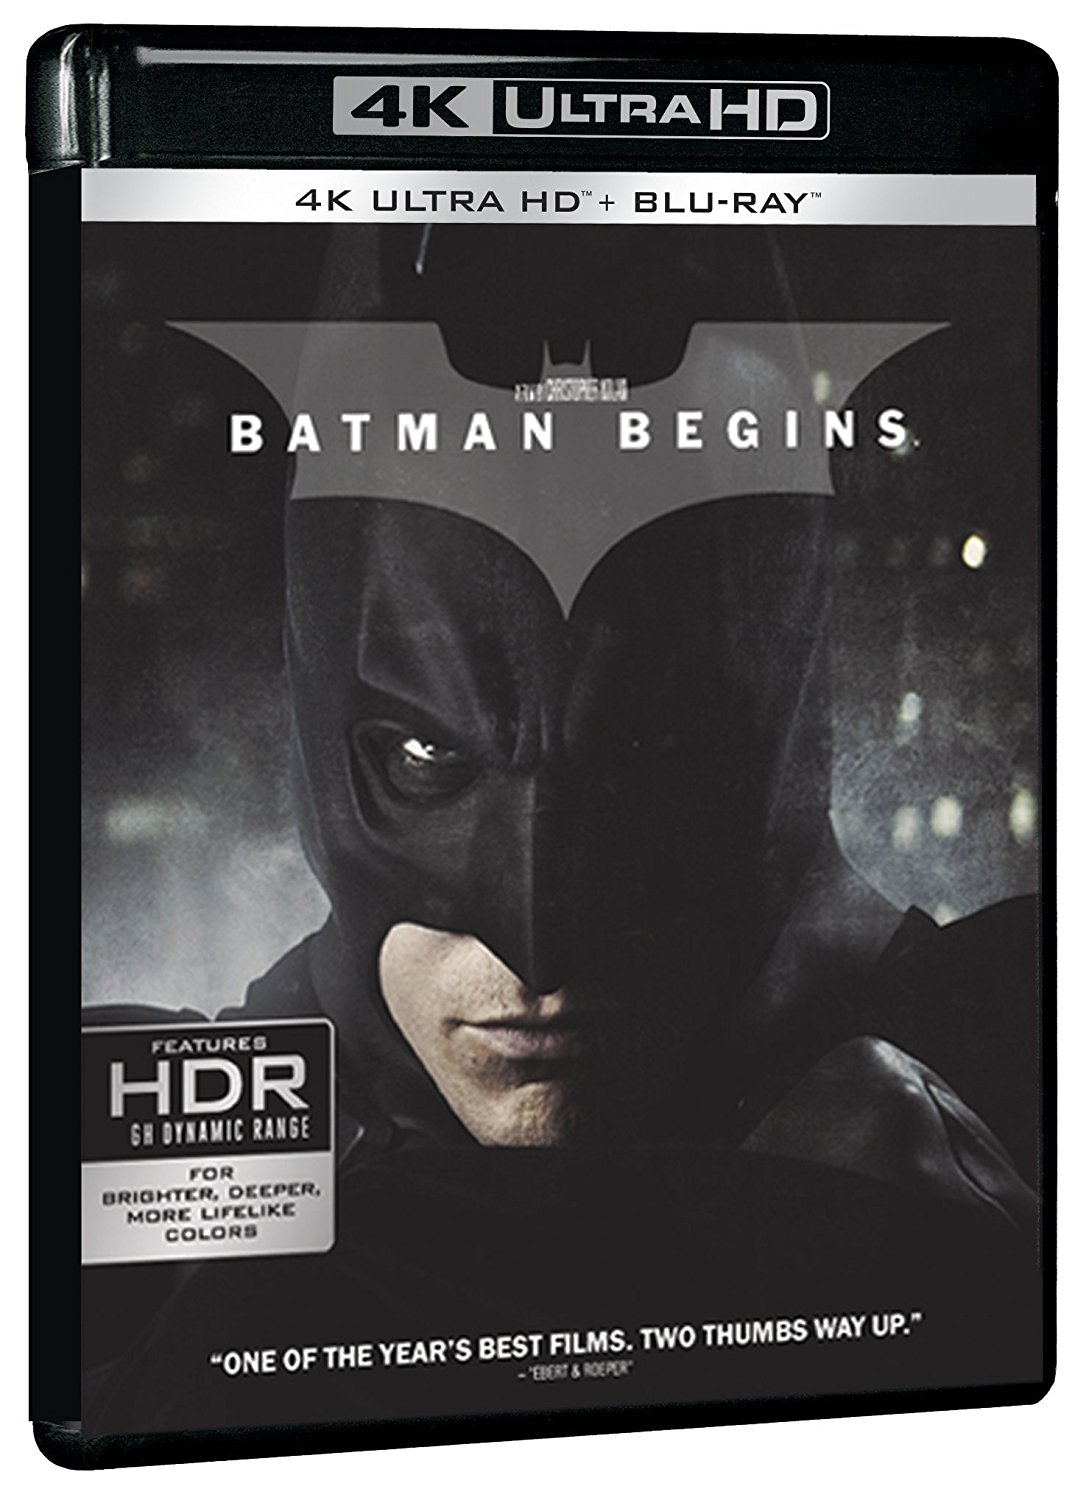 Batman Begins (4K Ultra HD) (Blu-ray), Christopher Nolan